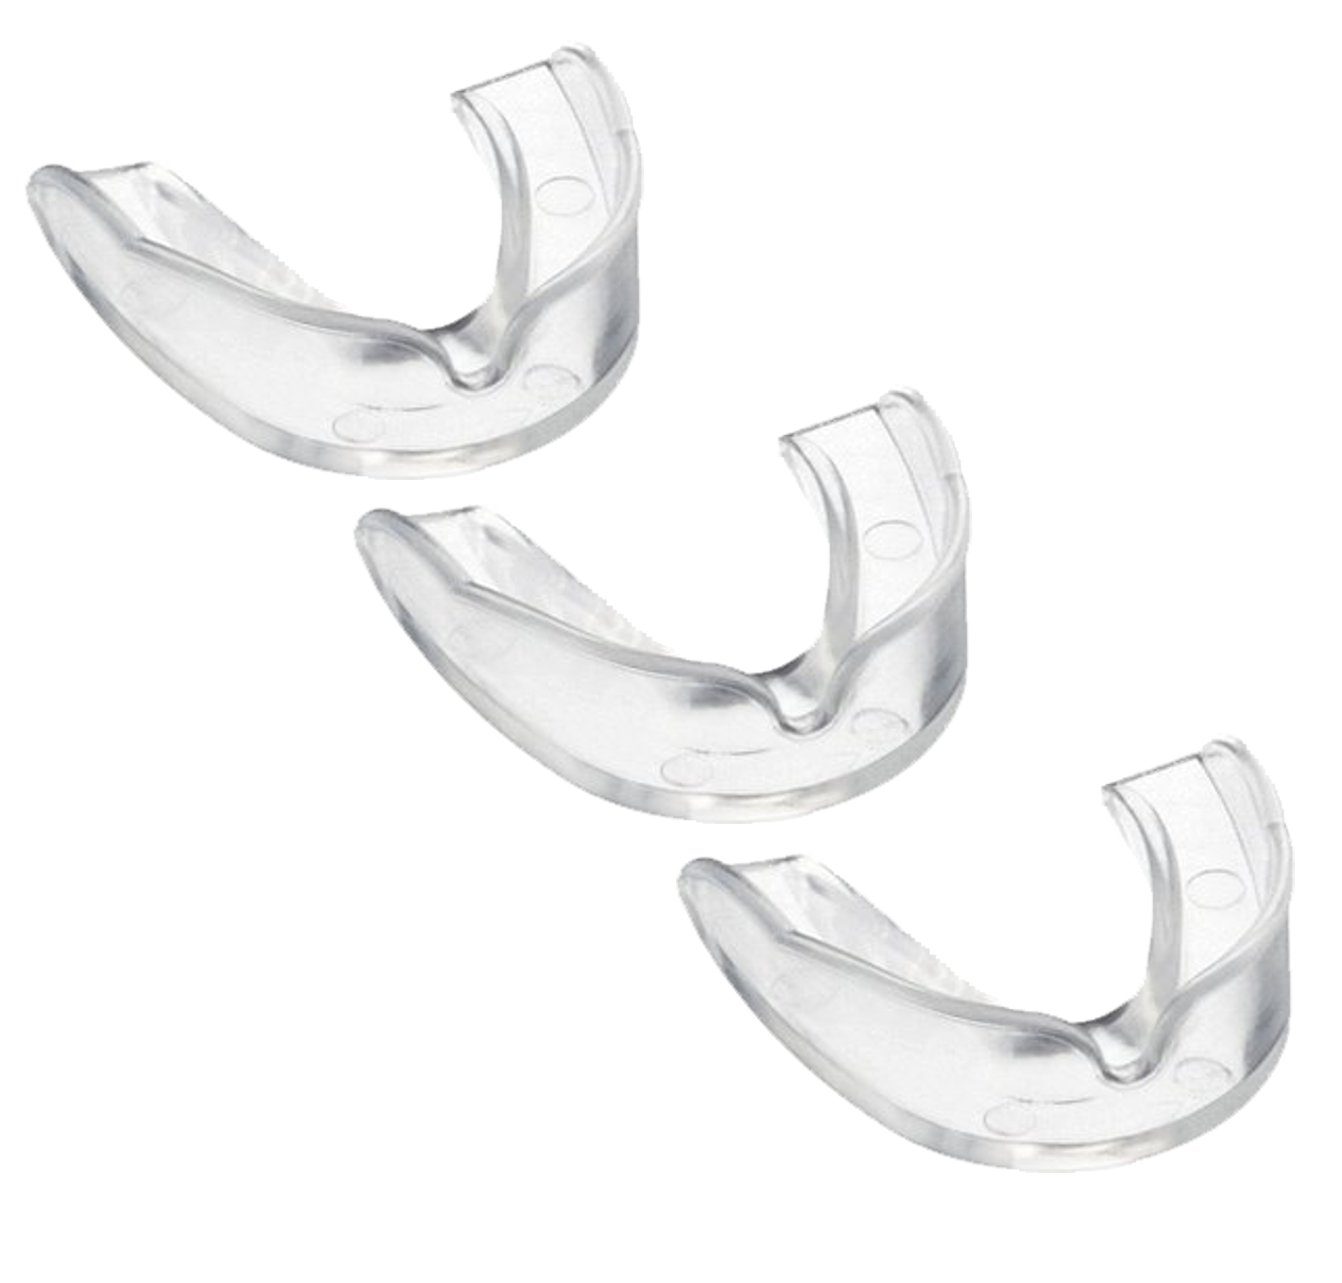 BAY-Sports Zahnschutz 3x Set Zahnschützer Mundschutz Sport Erwachsene, Sparset 3 Stück